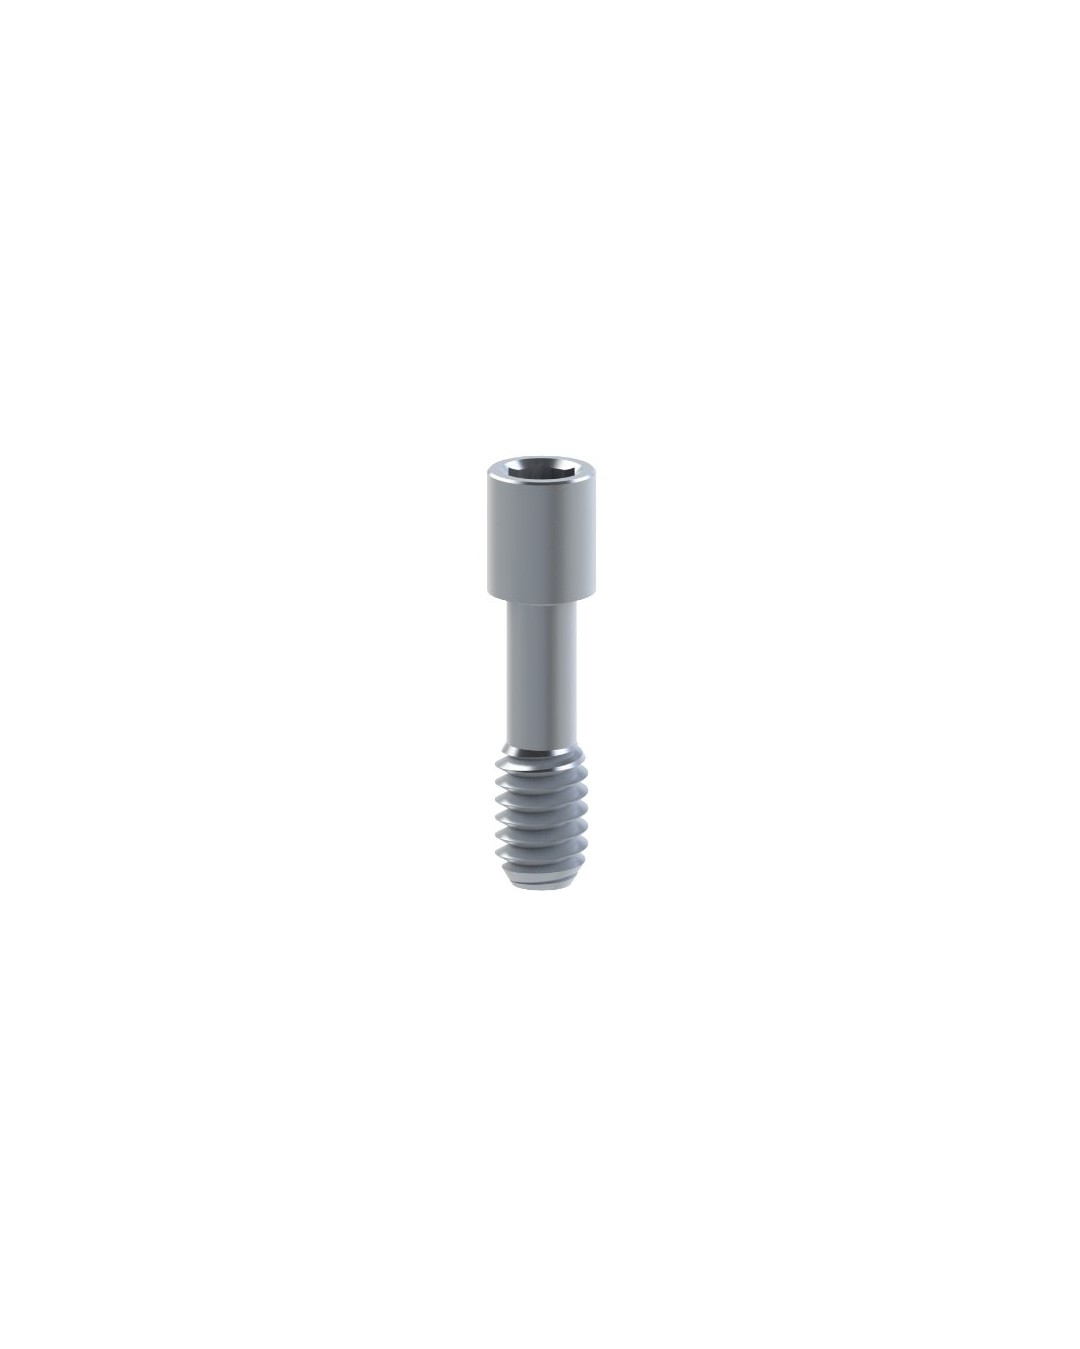 Titanium Screw compatible with Zimmer® Screw Vent®